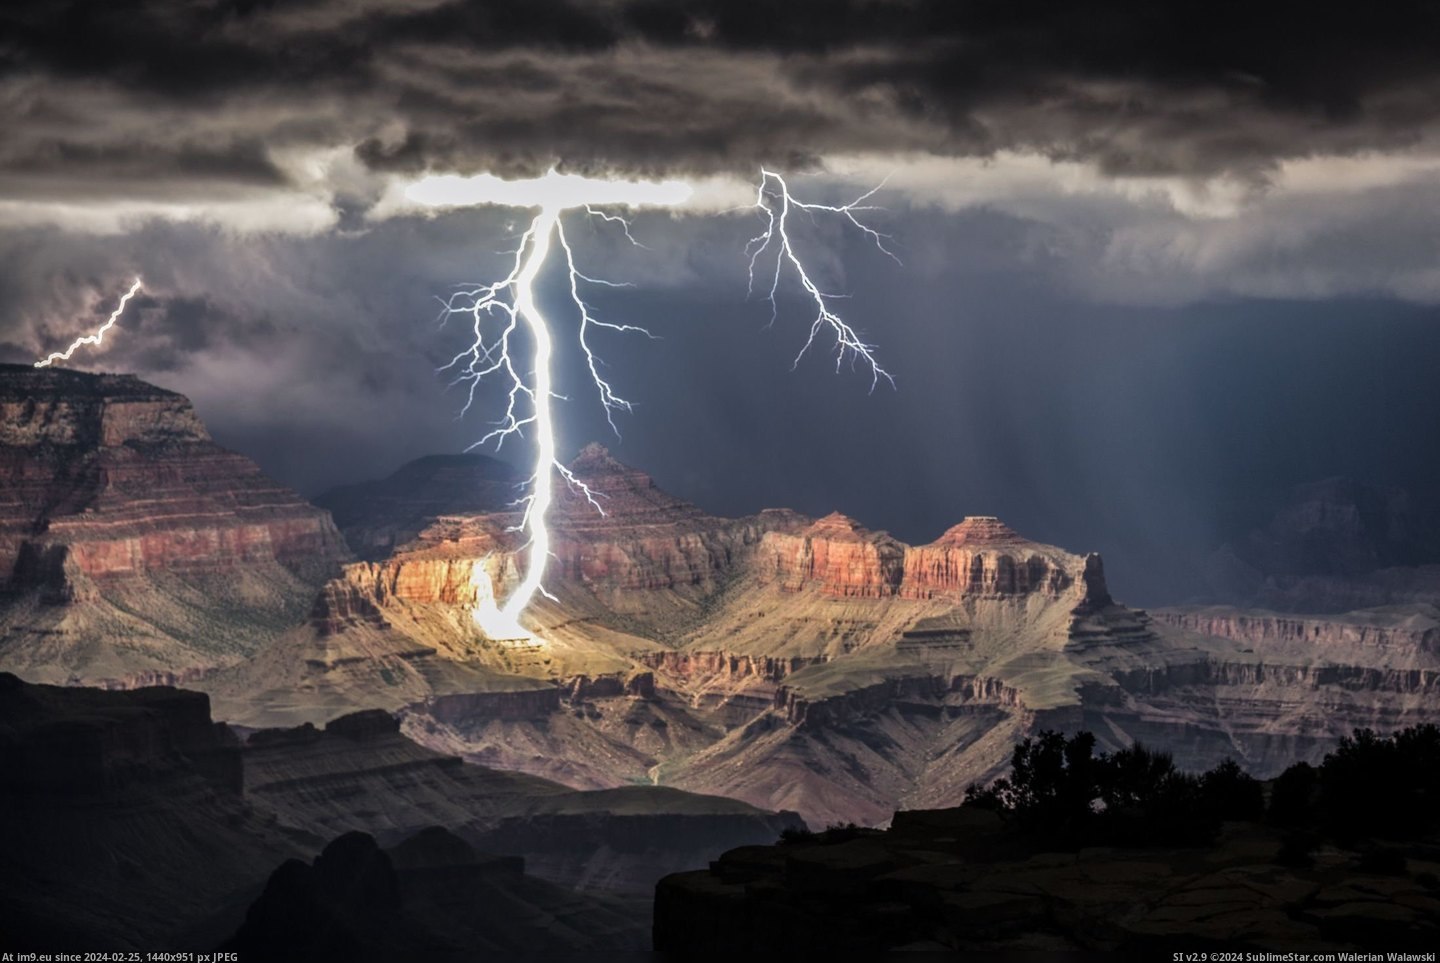 #Canyon #Lightning #Lit #Grand [Pics] The Grand Canyon lit only by lightning Pic. (Obraz z album My r/PICS favs))